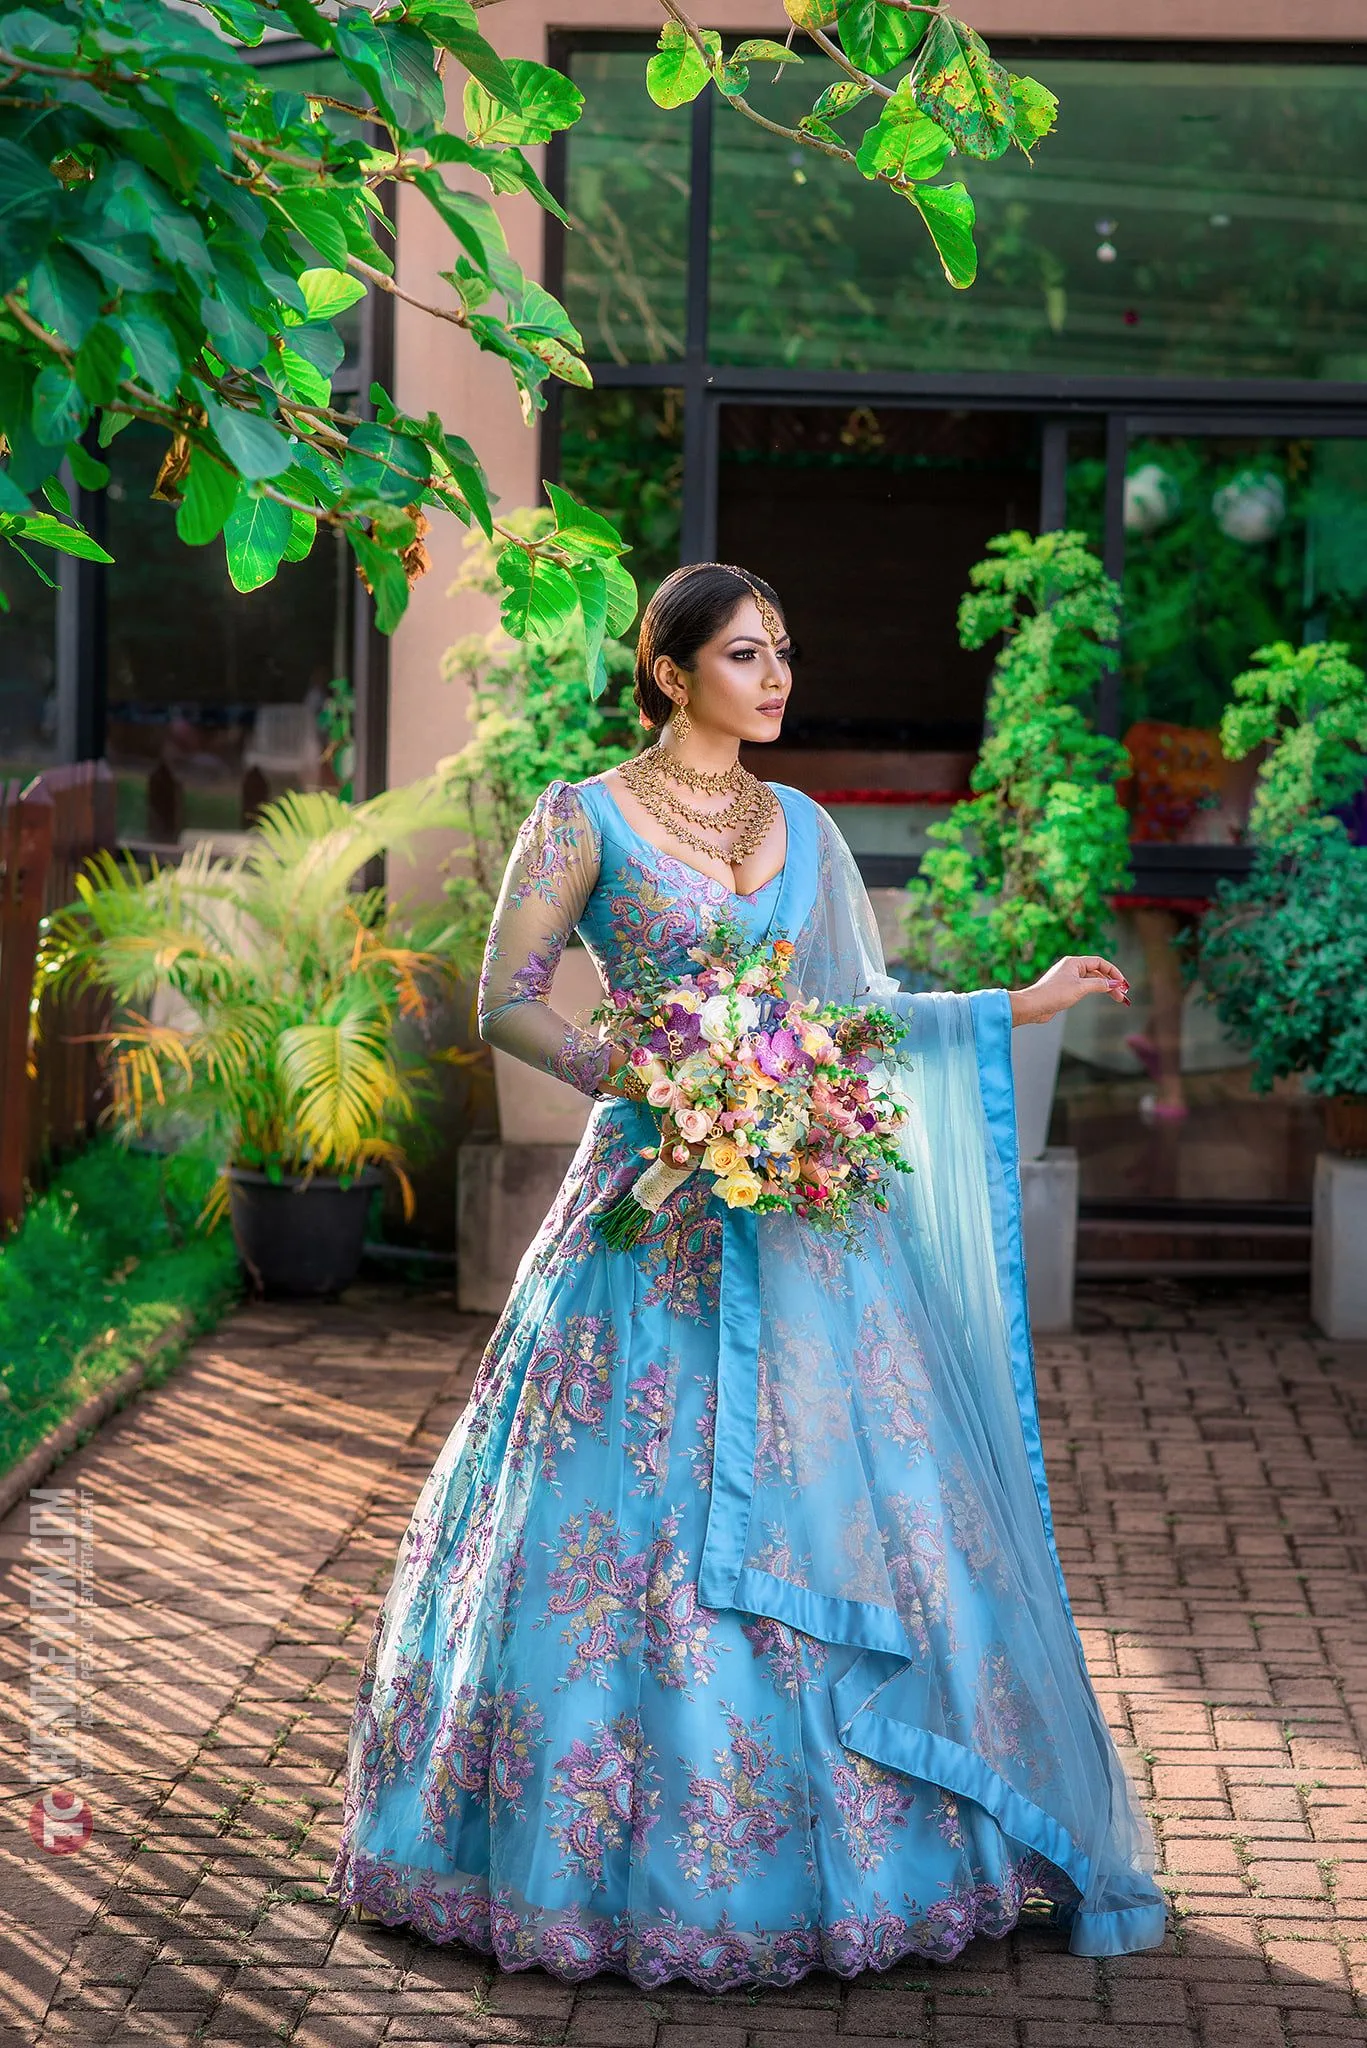 Actress Maneesha Kandekumbura looks gorgeous in a light blue lehenga